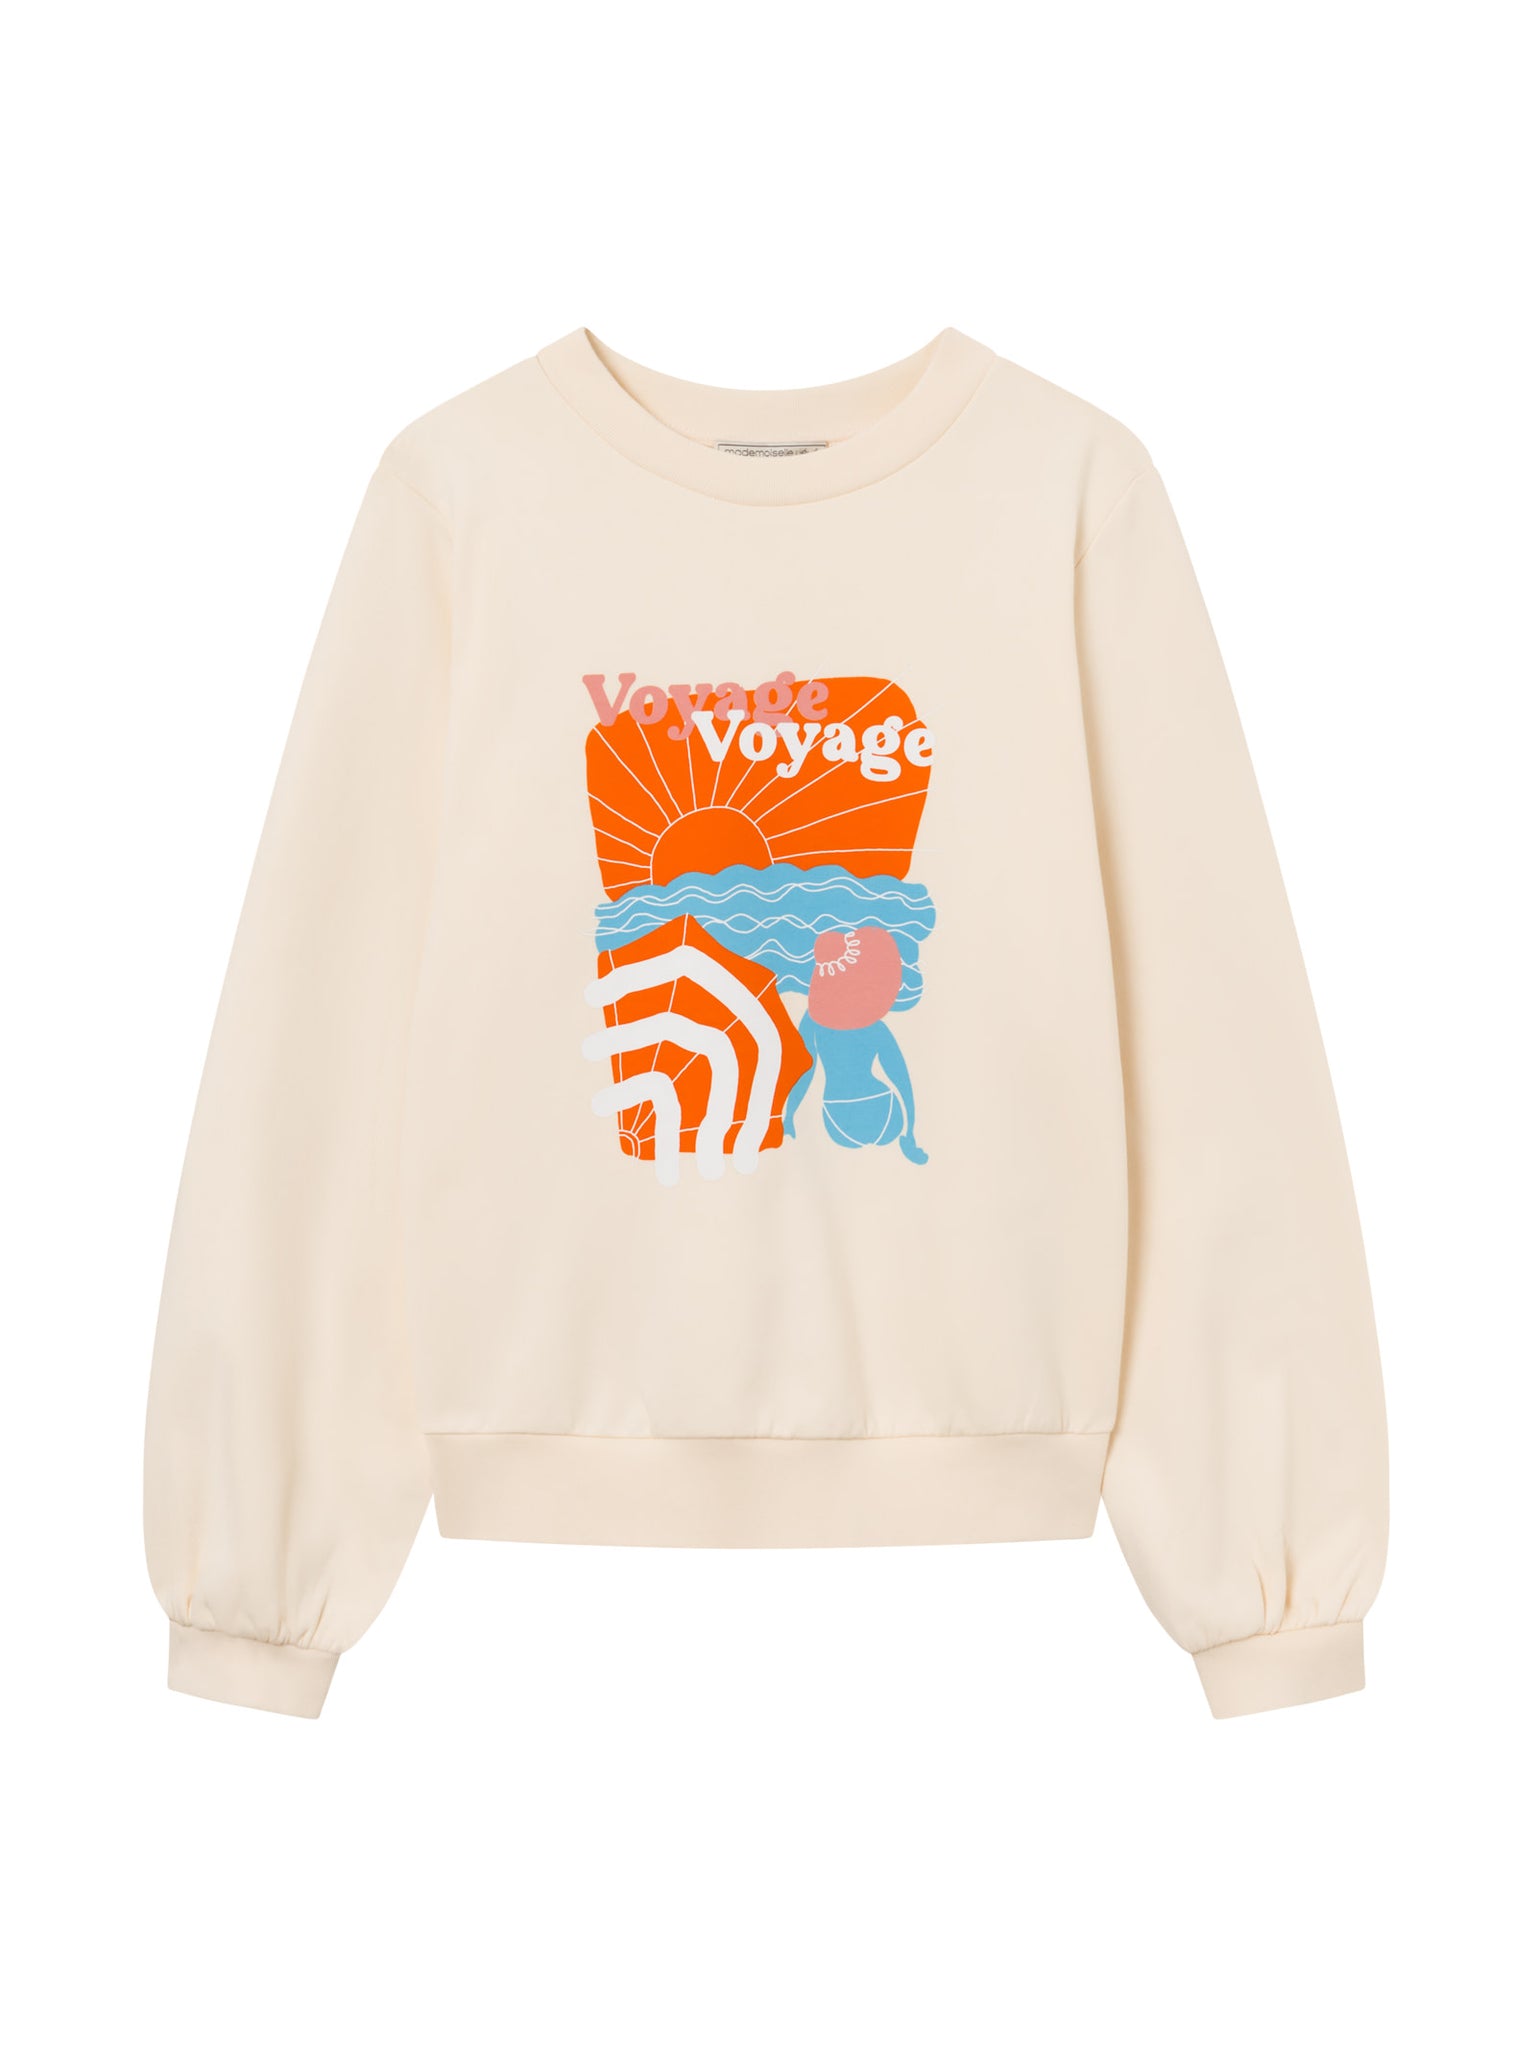 Voyage Voyage Sweater